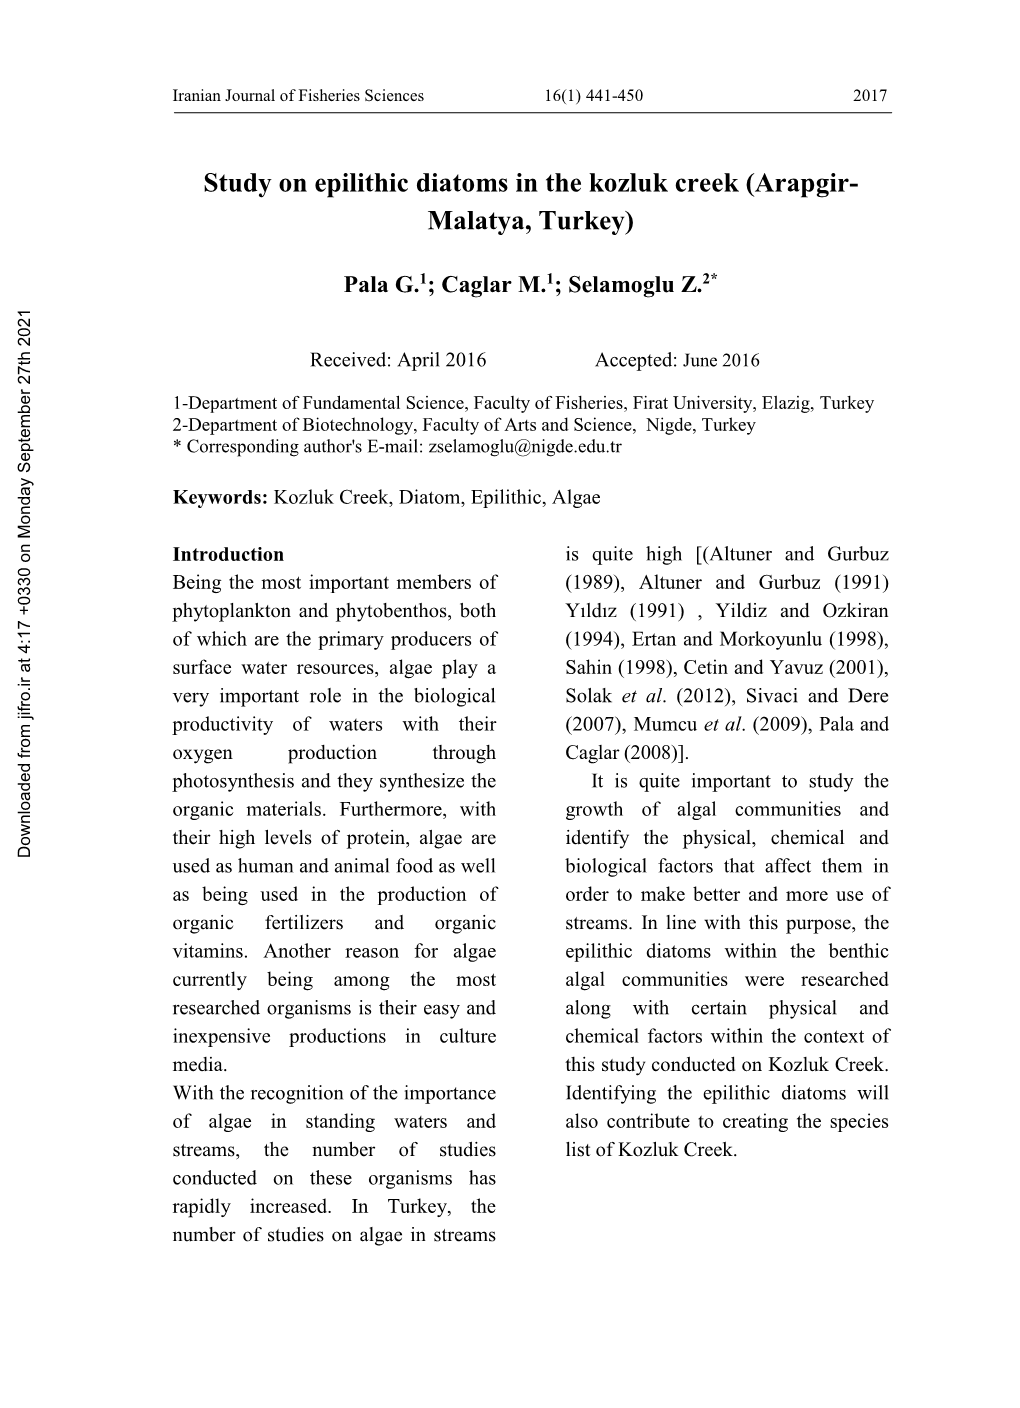 Short Communication:Study on Epilithic Diatoms in the Kozluk Creek (Arapgir-Malatya, Turkey)